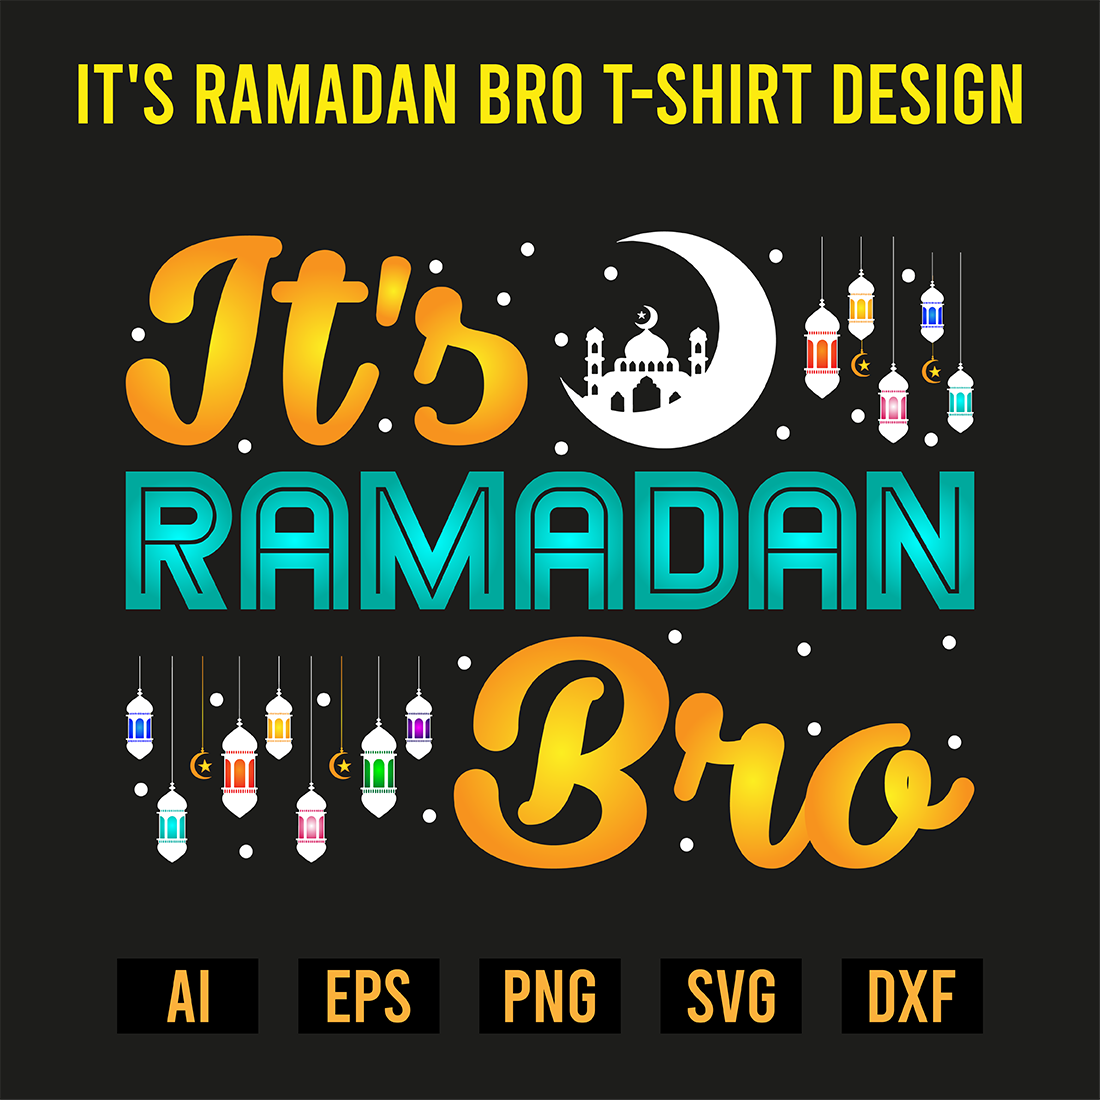 Its Ramadan Bro T-Shirt Design preview image.